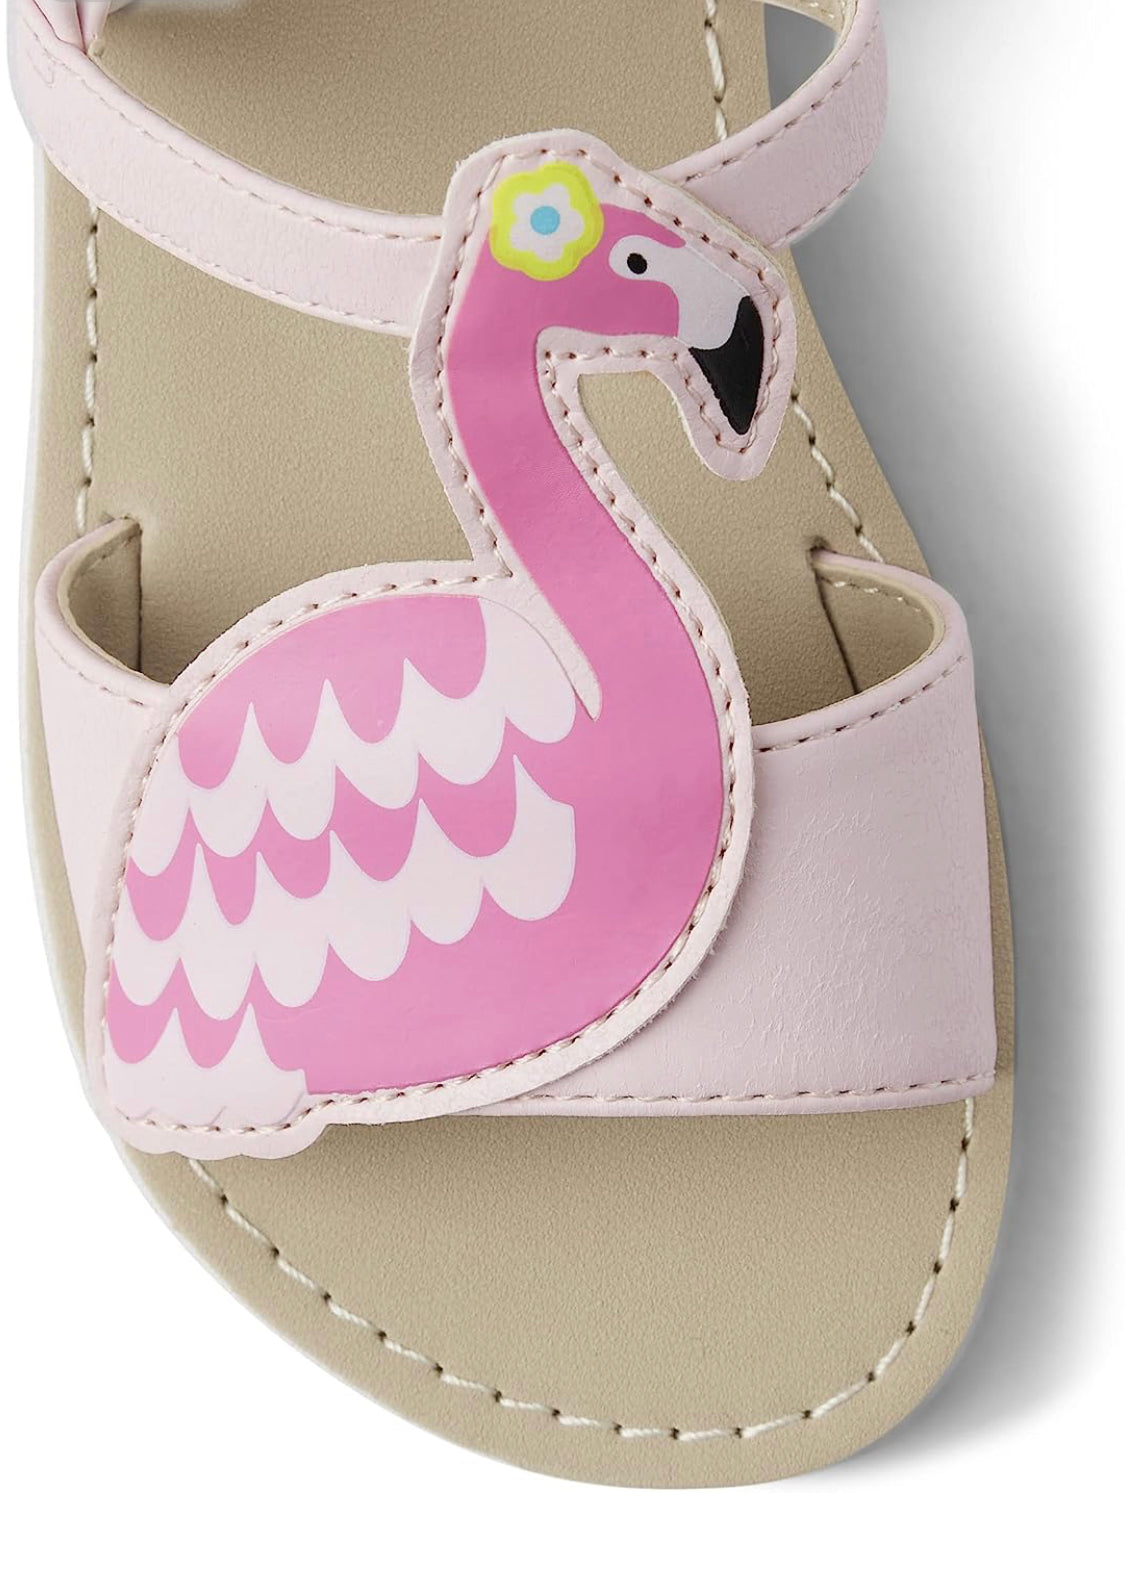 Girls Flamingo Sandals